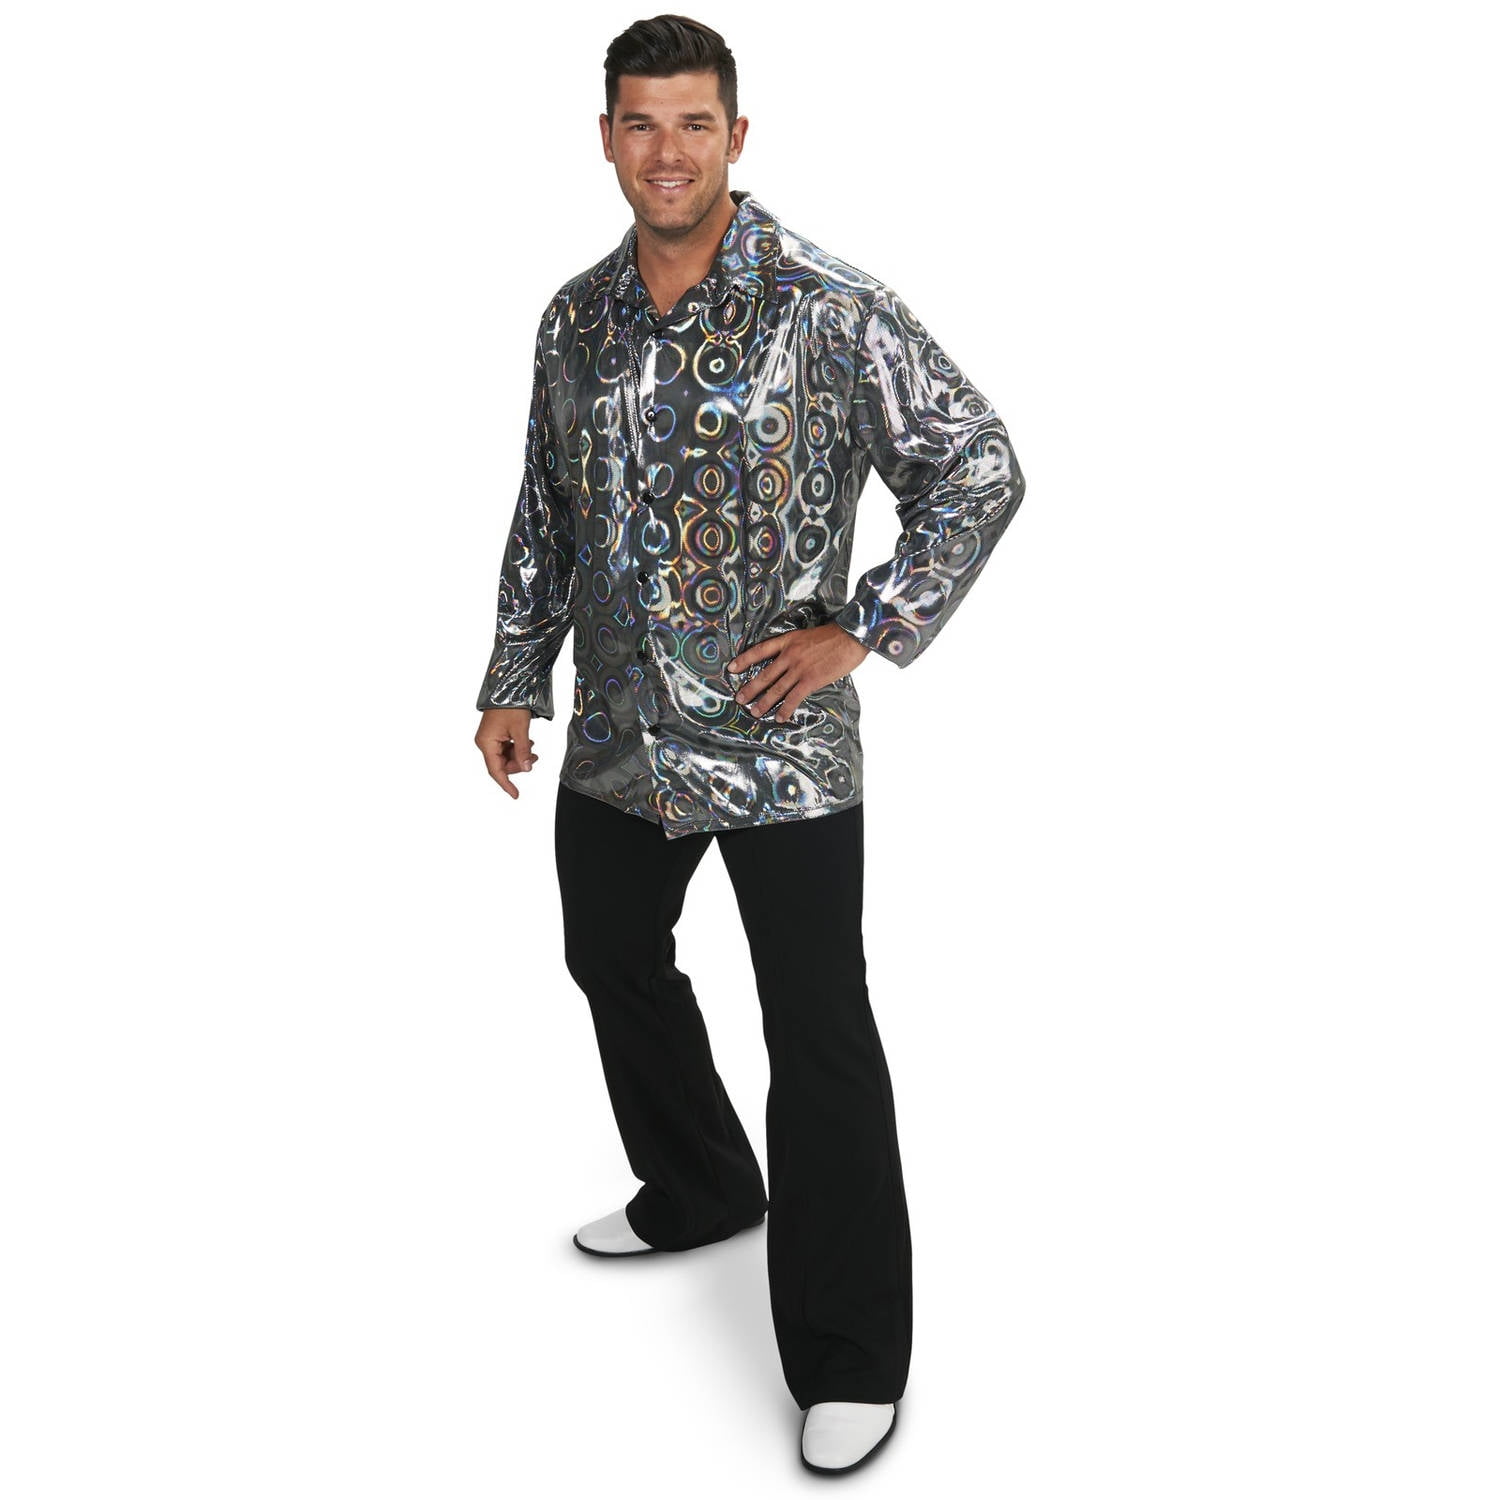 Disco Shirt Men's Plus Size Adult Halloween Costume - Walmart.com